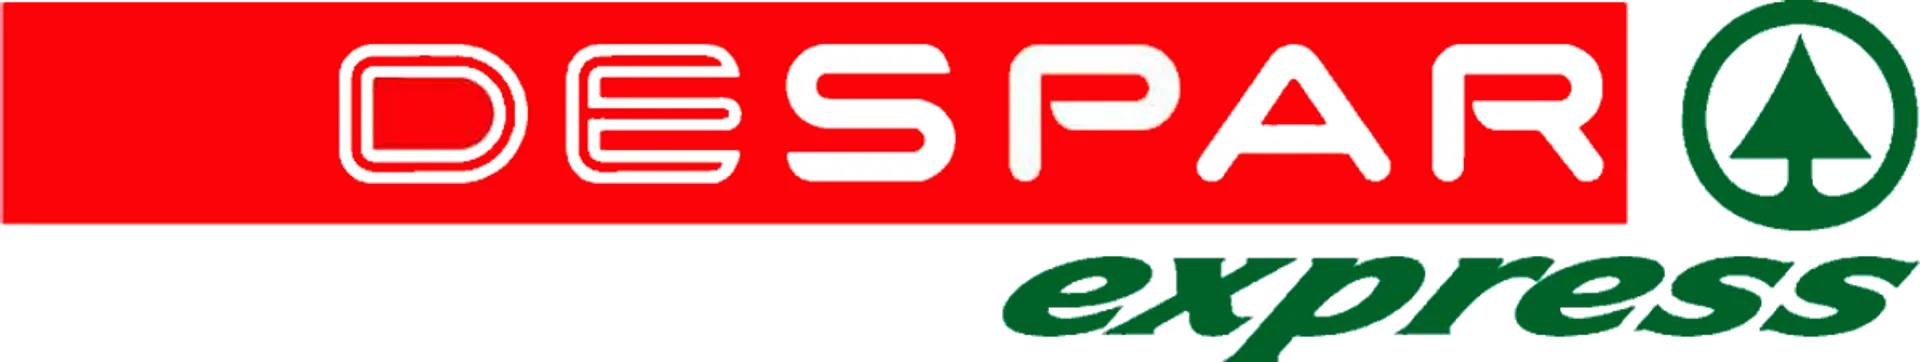 DESPAR EXPRESS logo